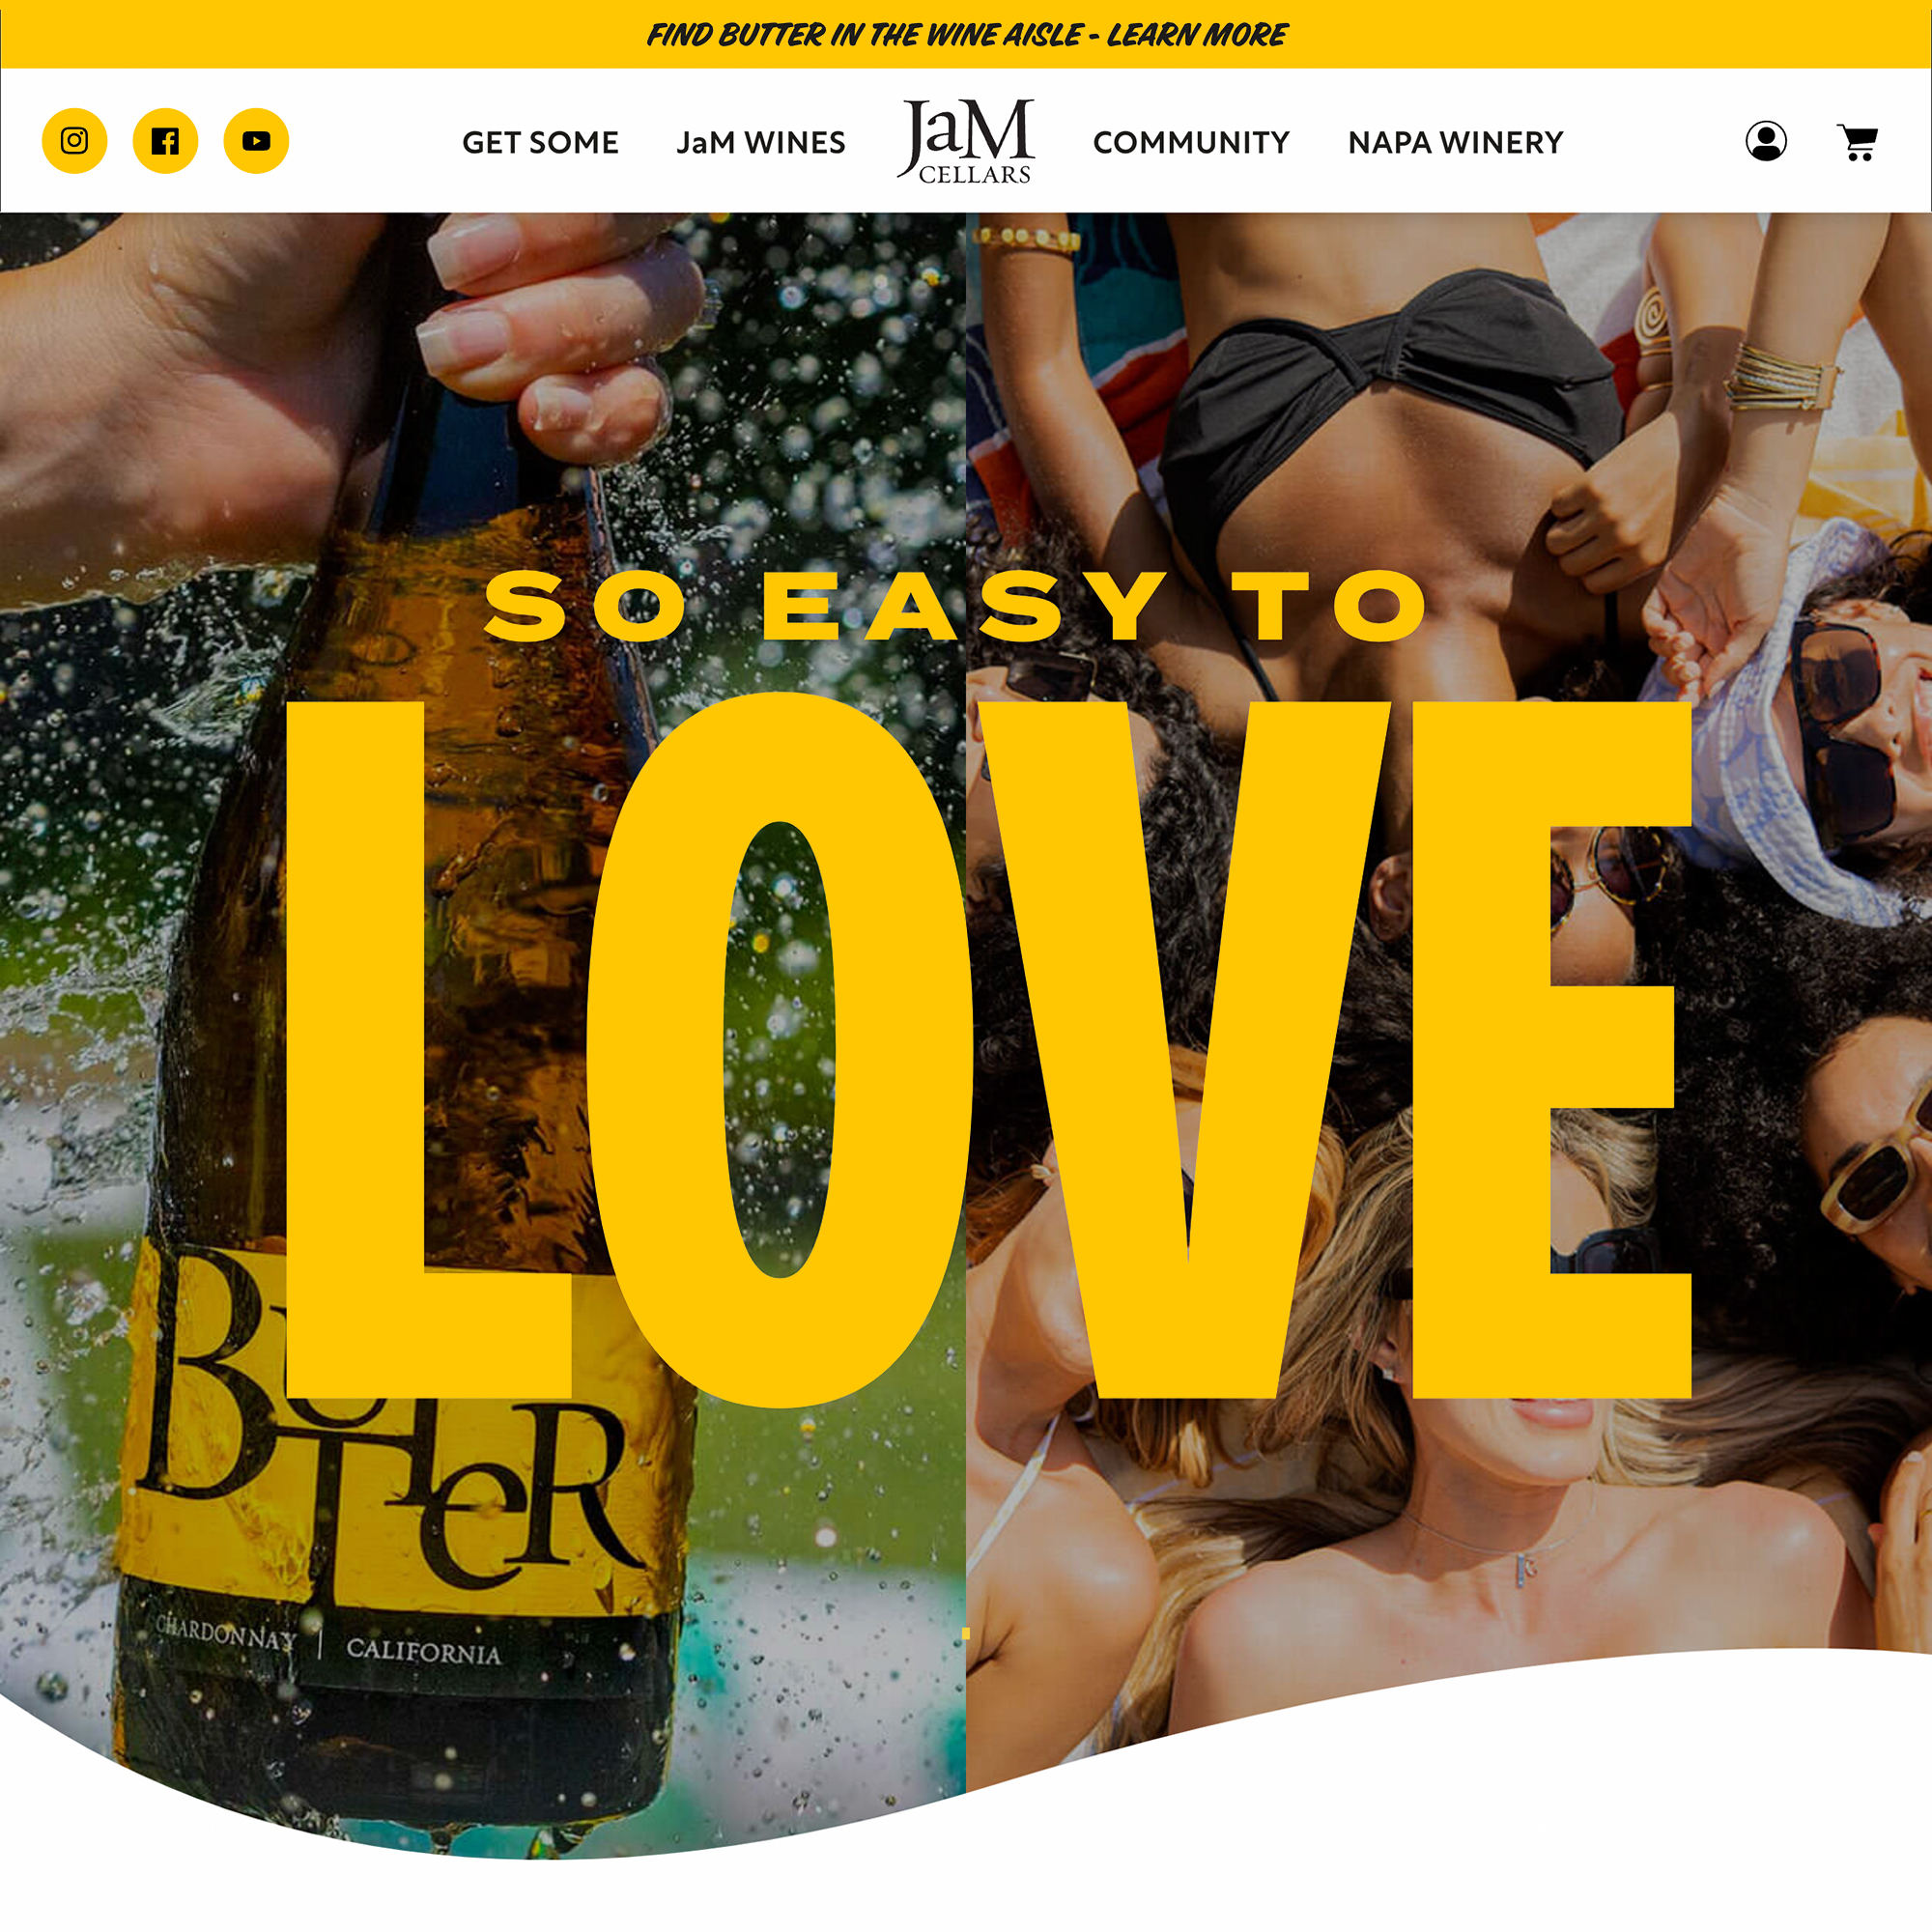 JaM Cellars Launches New Website